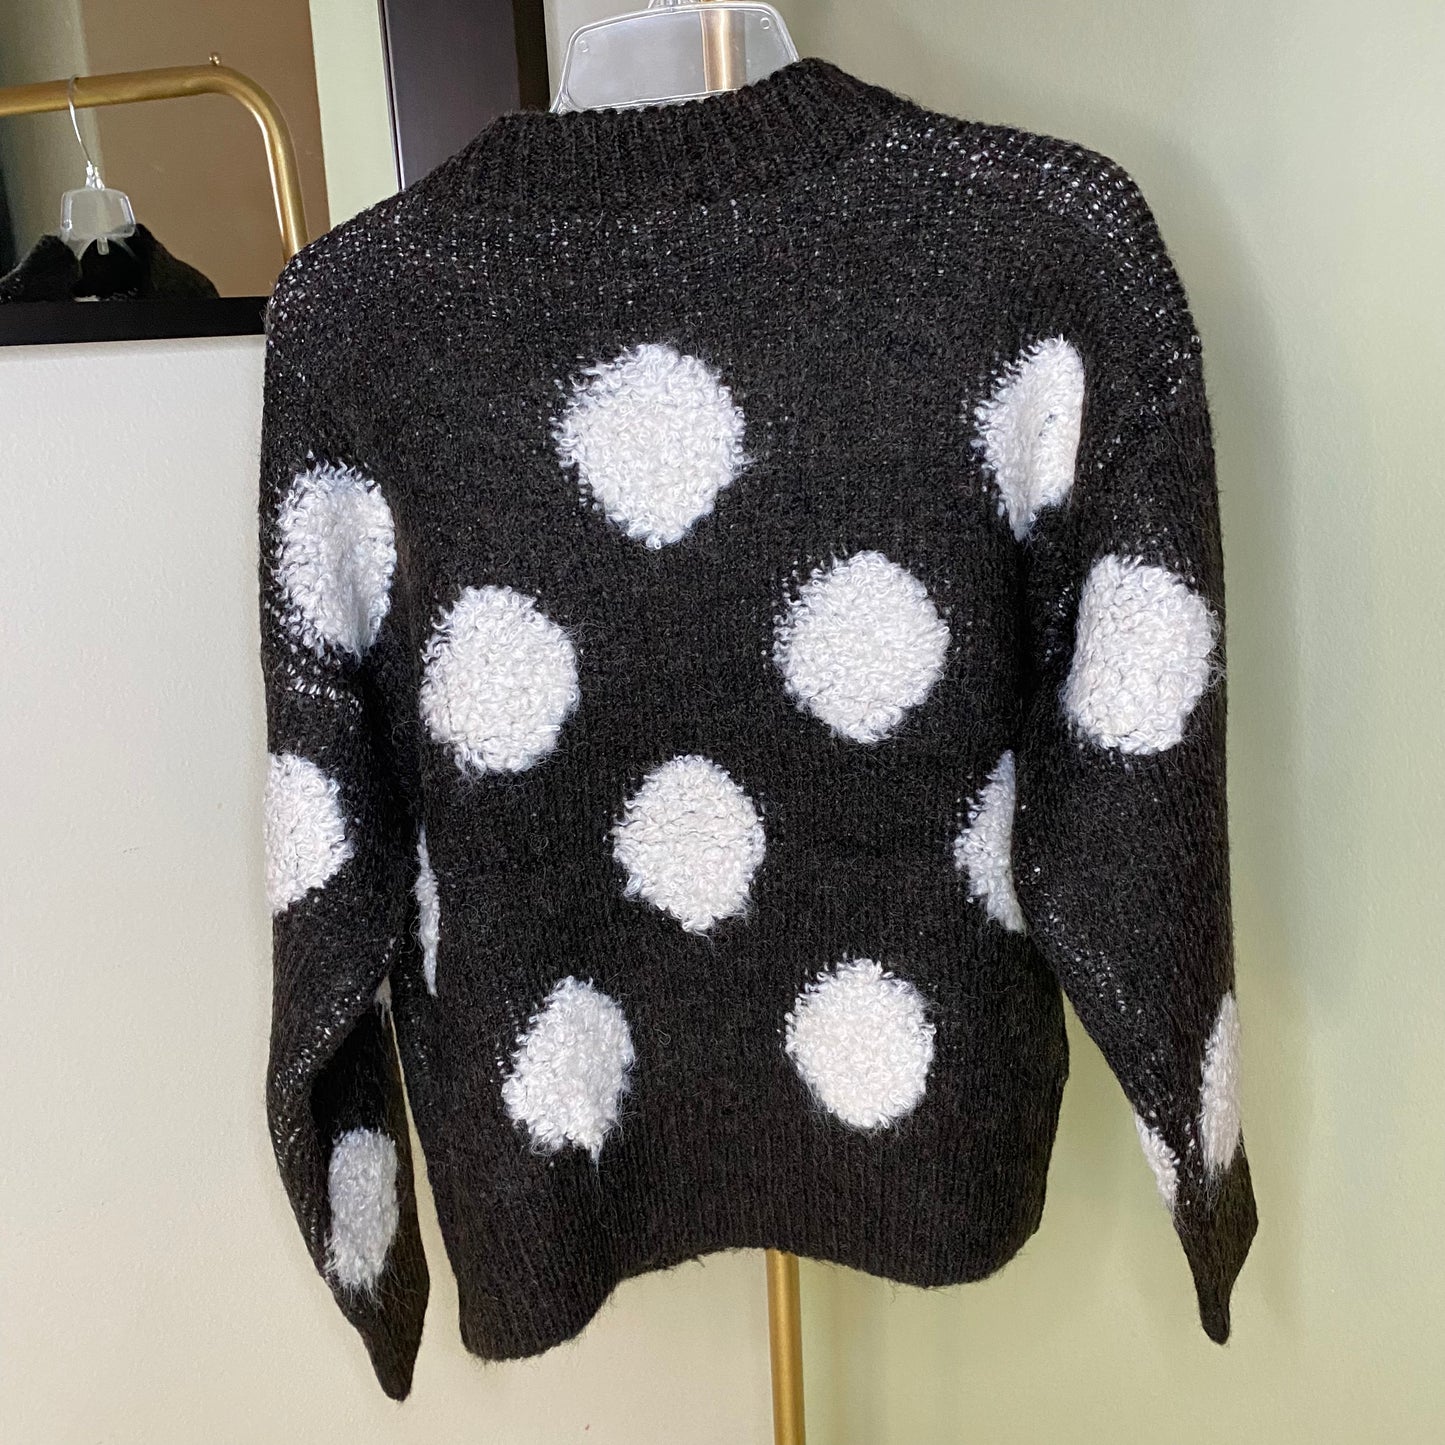 Women’s Polkadot Sweater